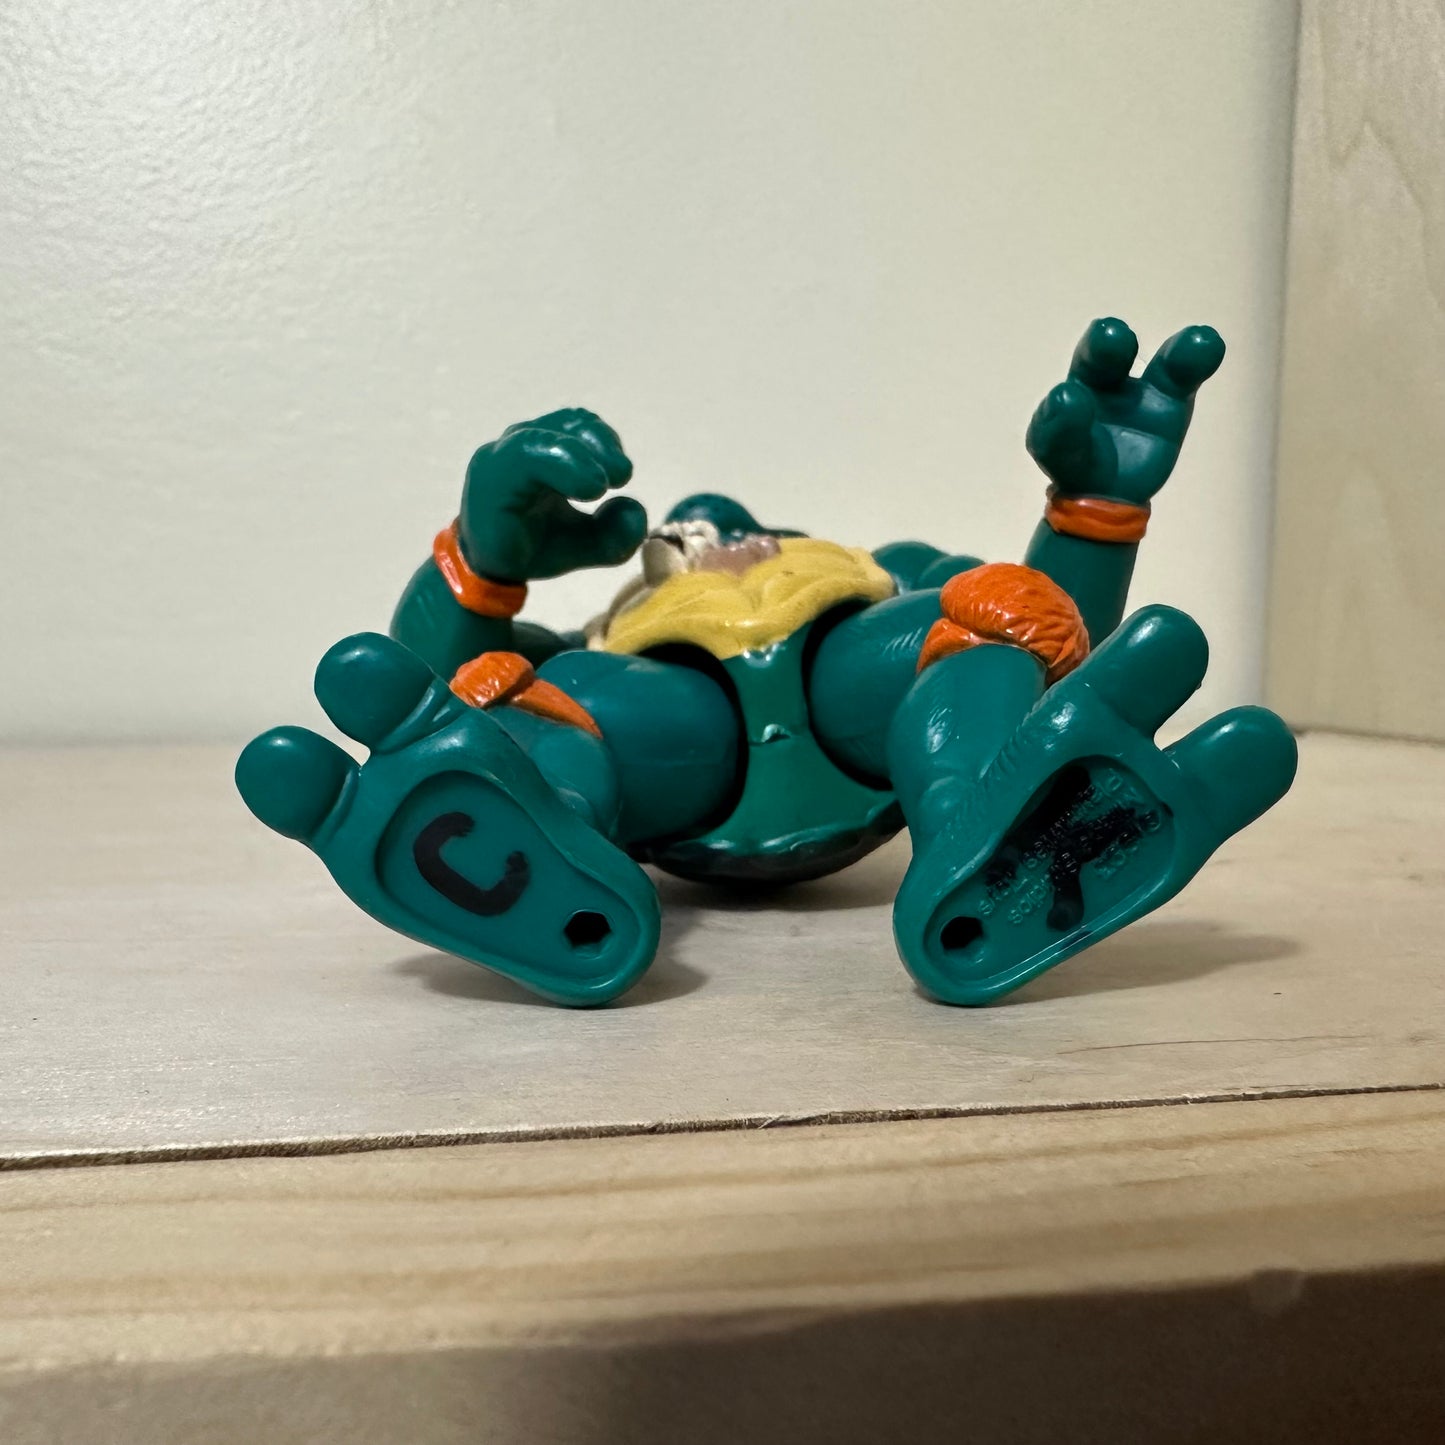 TMNT Cave Turtles Michaelangelo no accessories Vintage Ninja Turtles Action Figure Toy